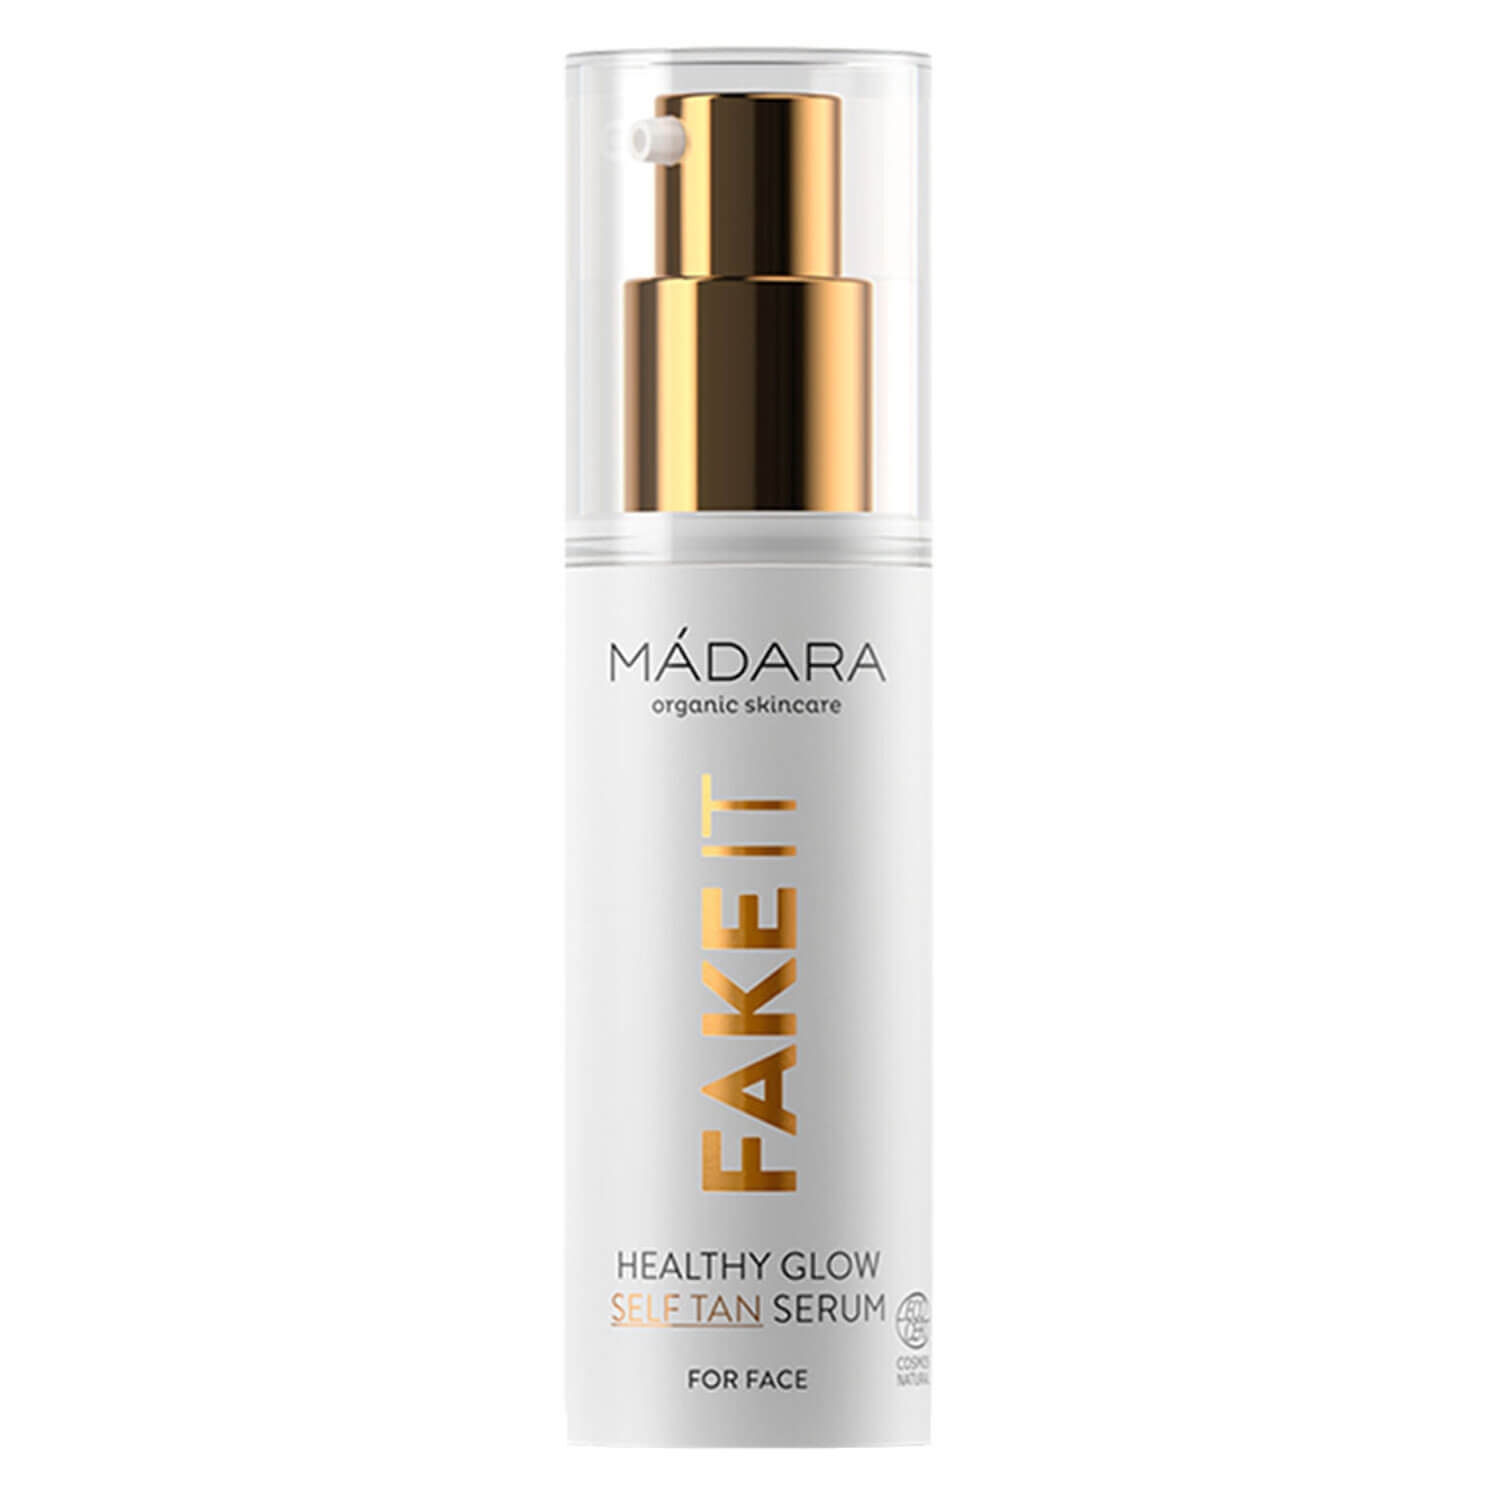 Produktbild von MÁDARA Care - Fake It Healthy Glow Self Tan Serum For Face